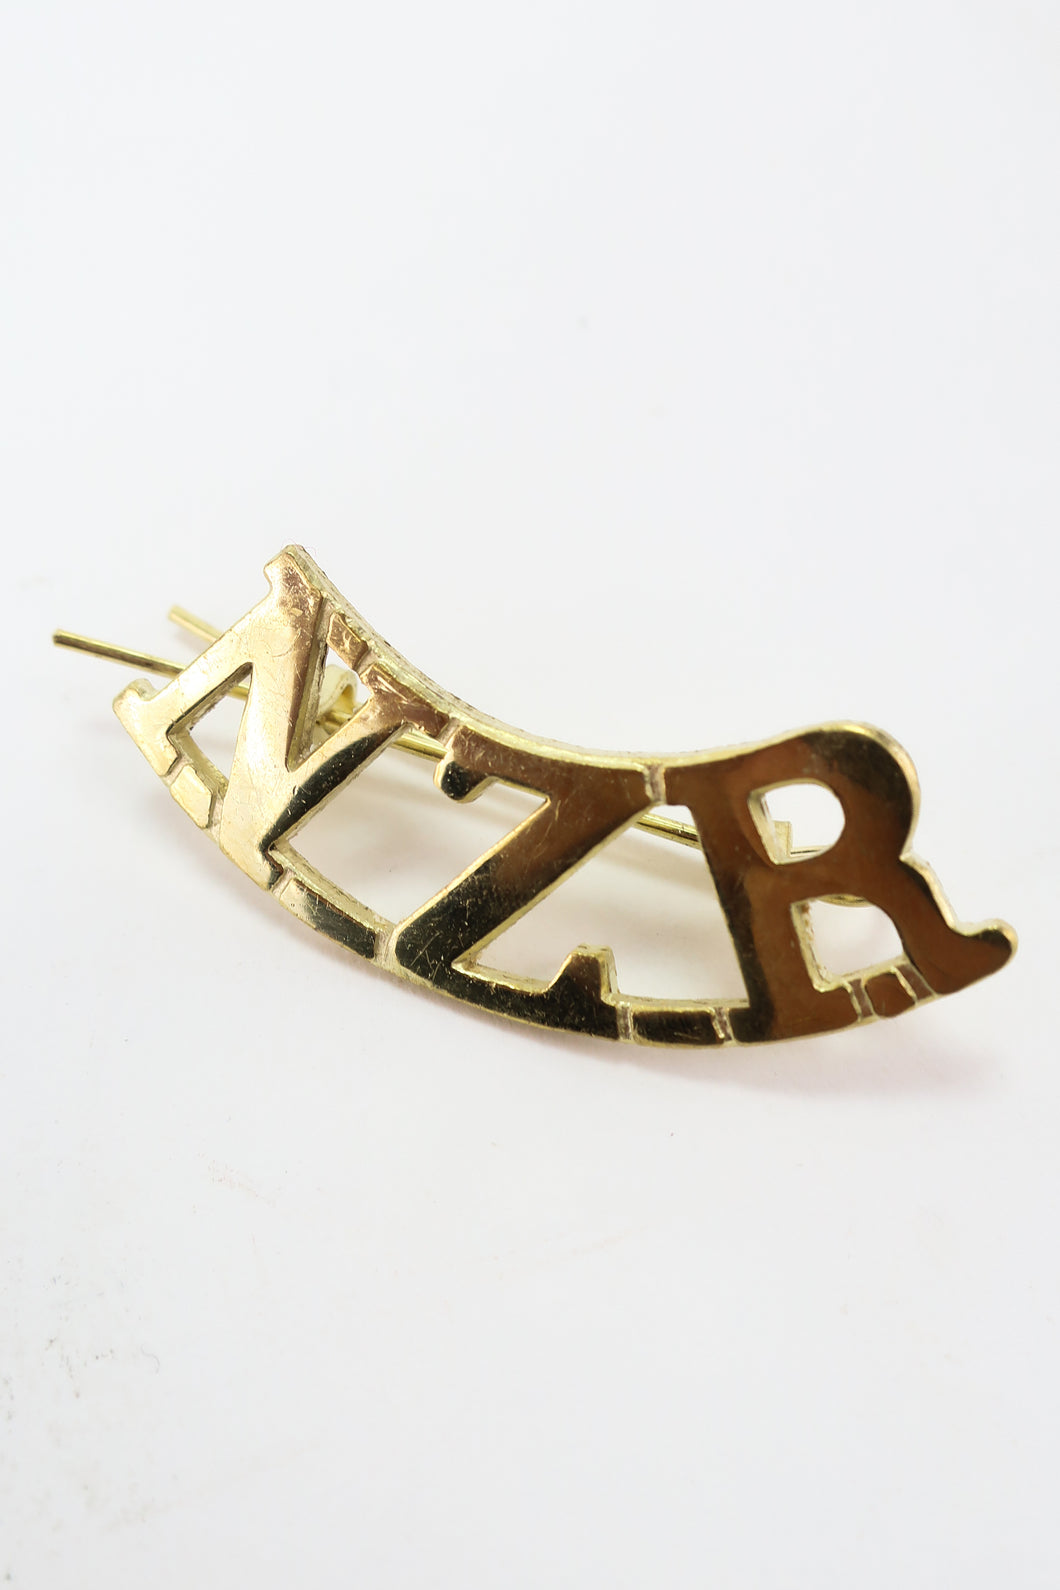 New Zealand Regiment Shoulder Titles